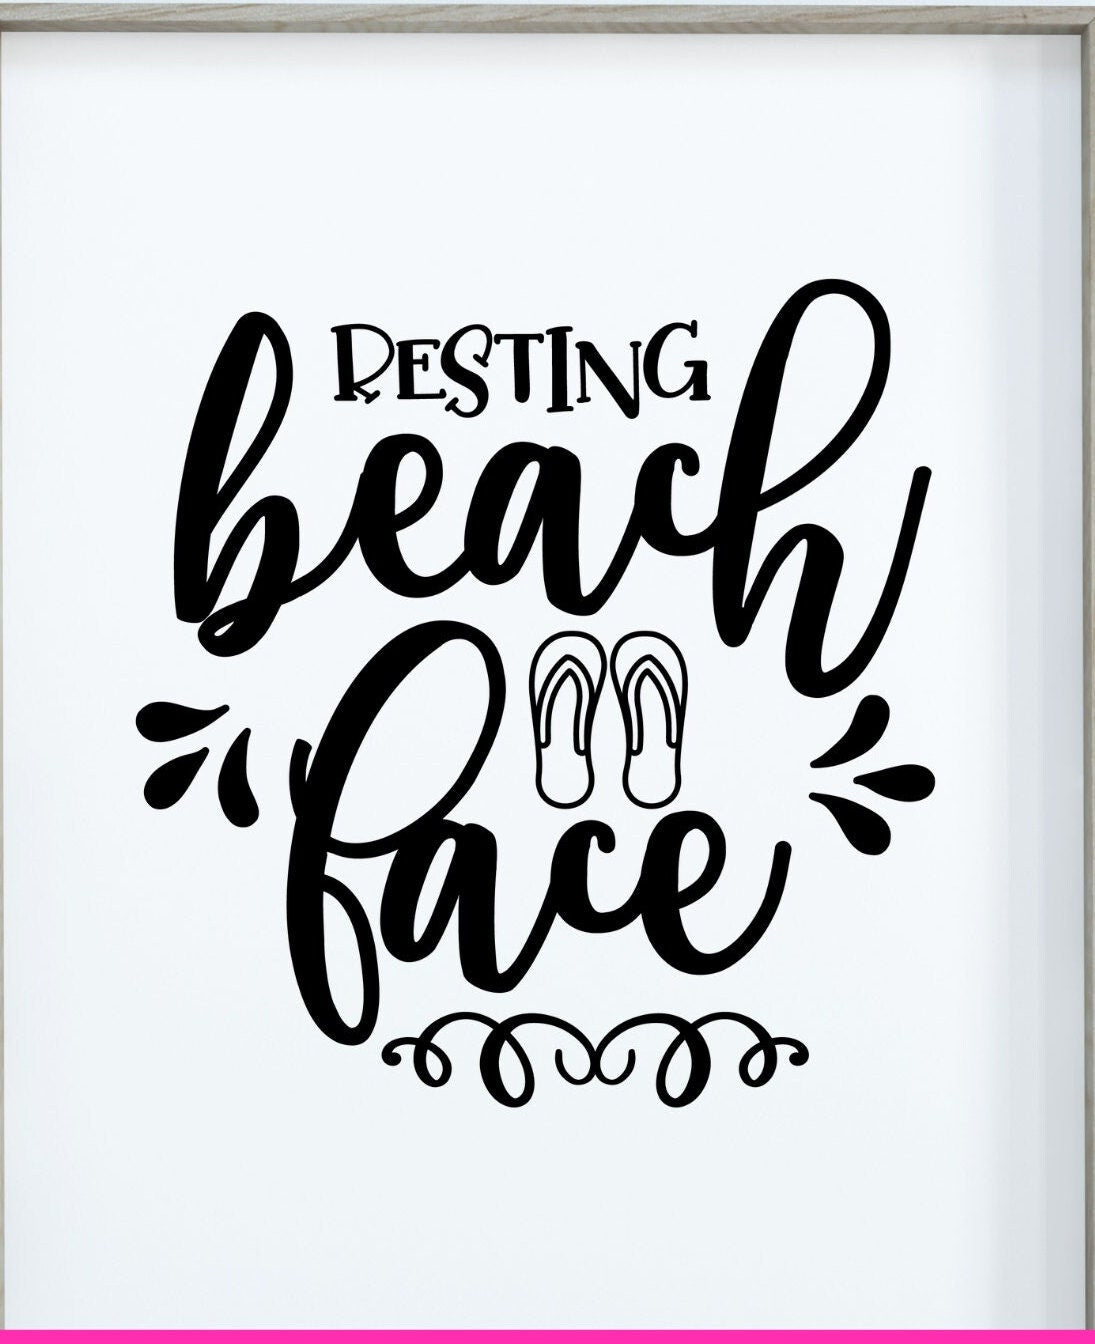 Resting Beach Face